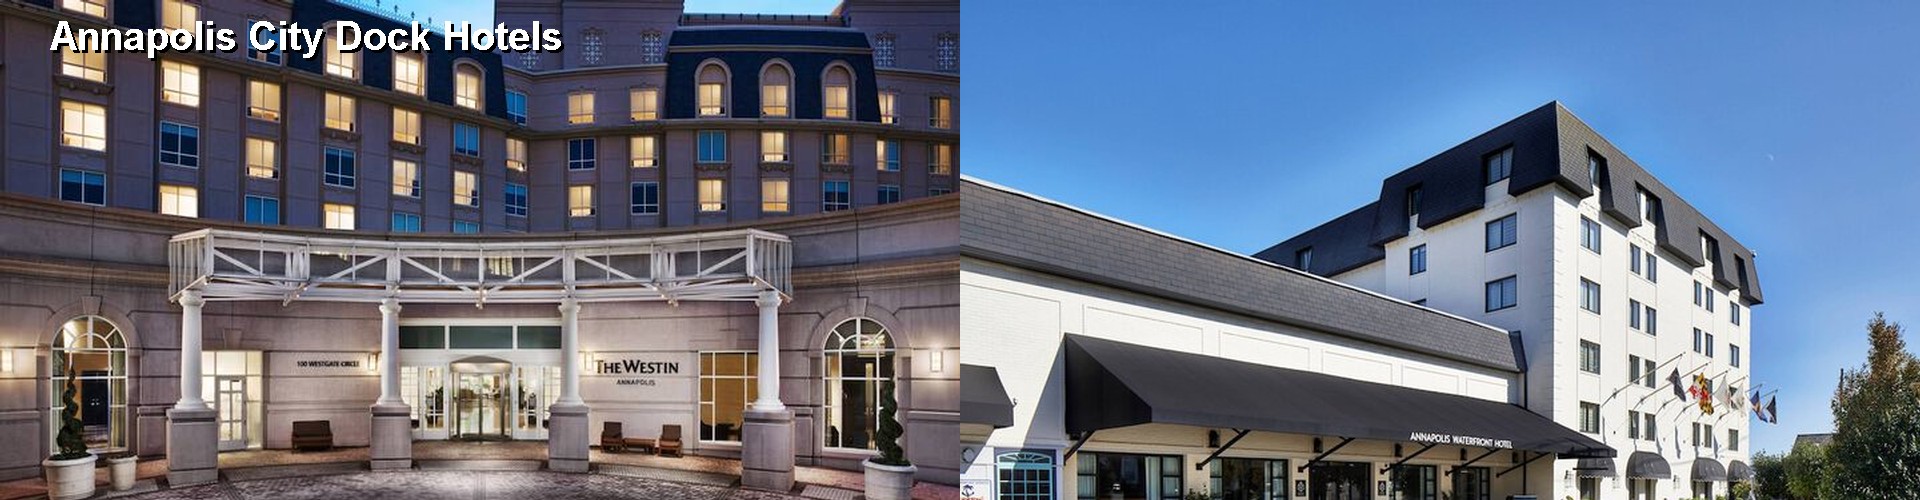 5 Best Hotels near Annapolis City Dock